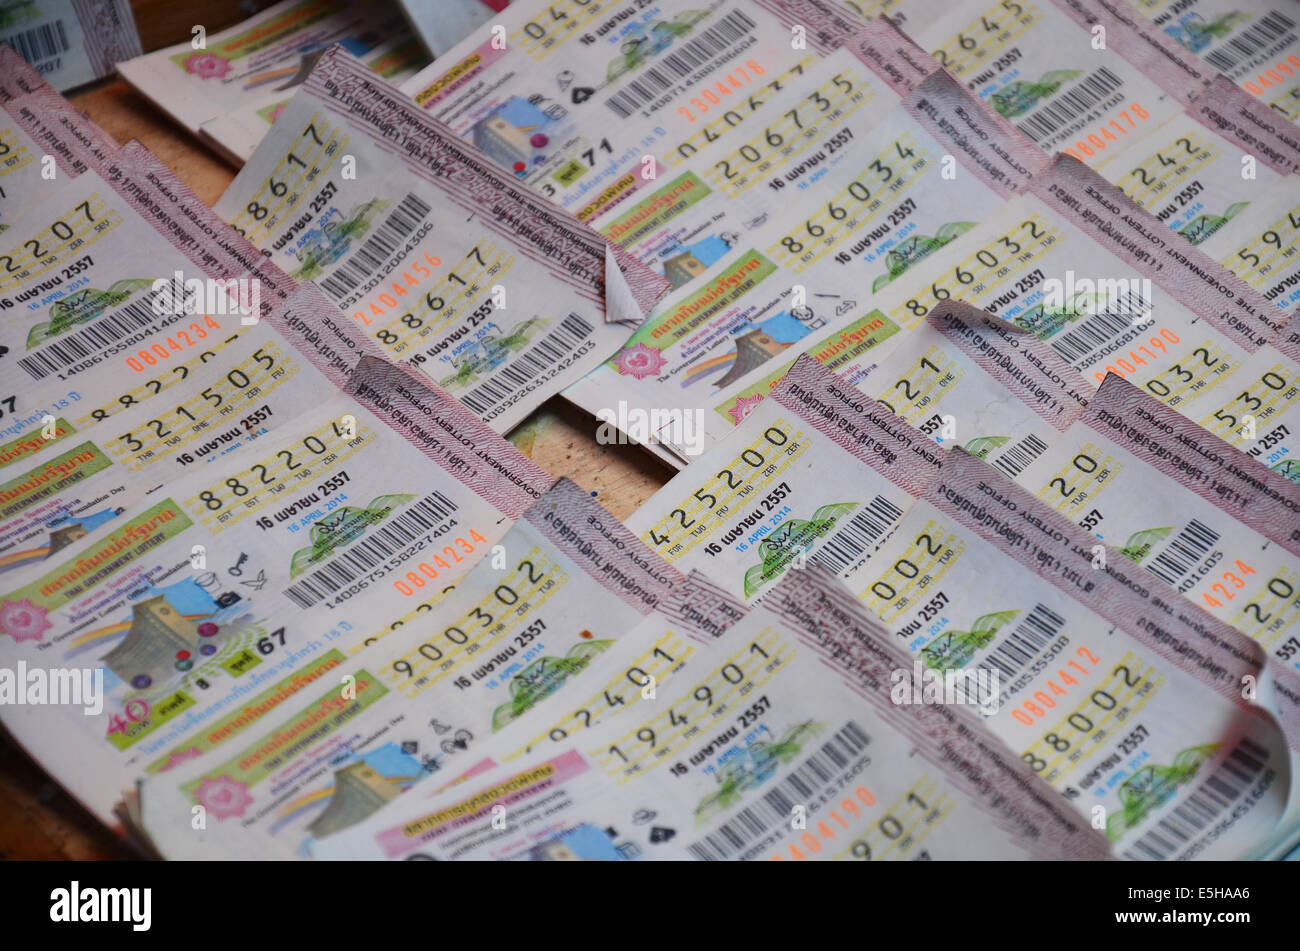 Thailand lottery 2014